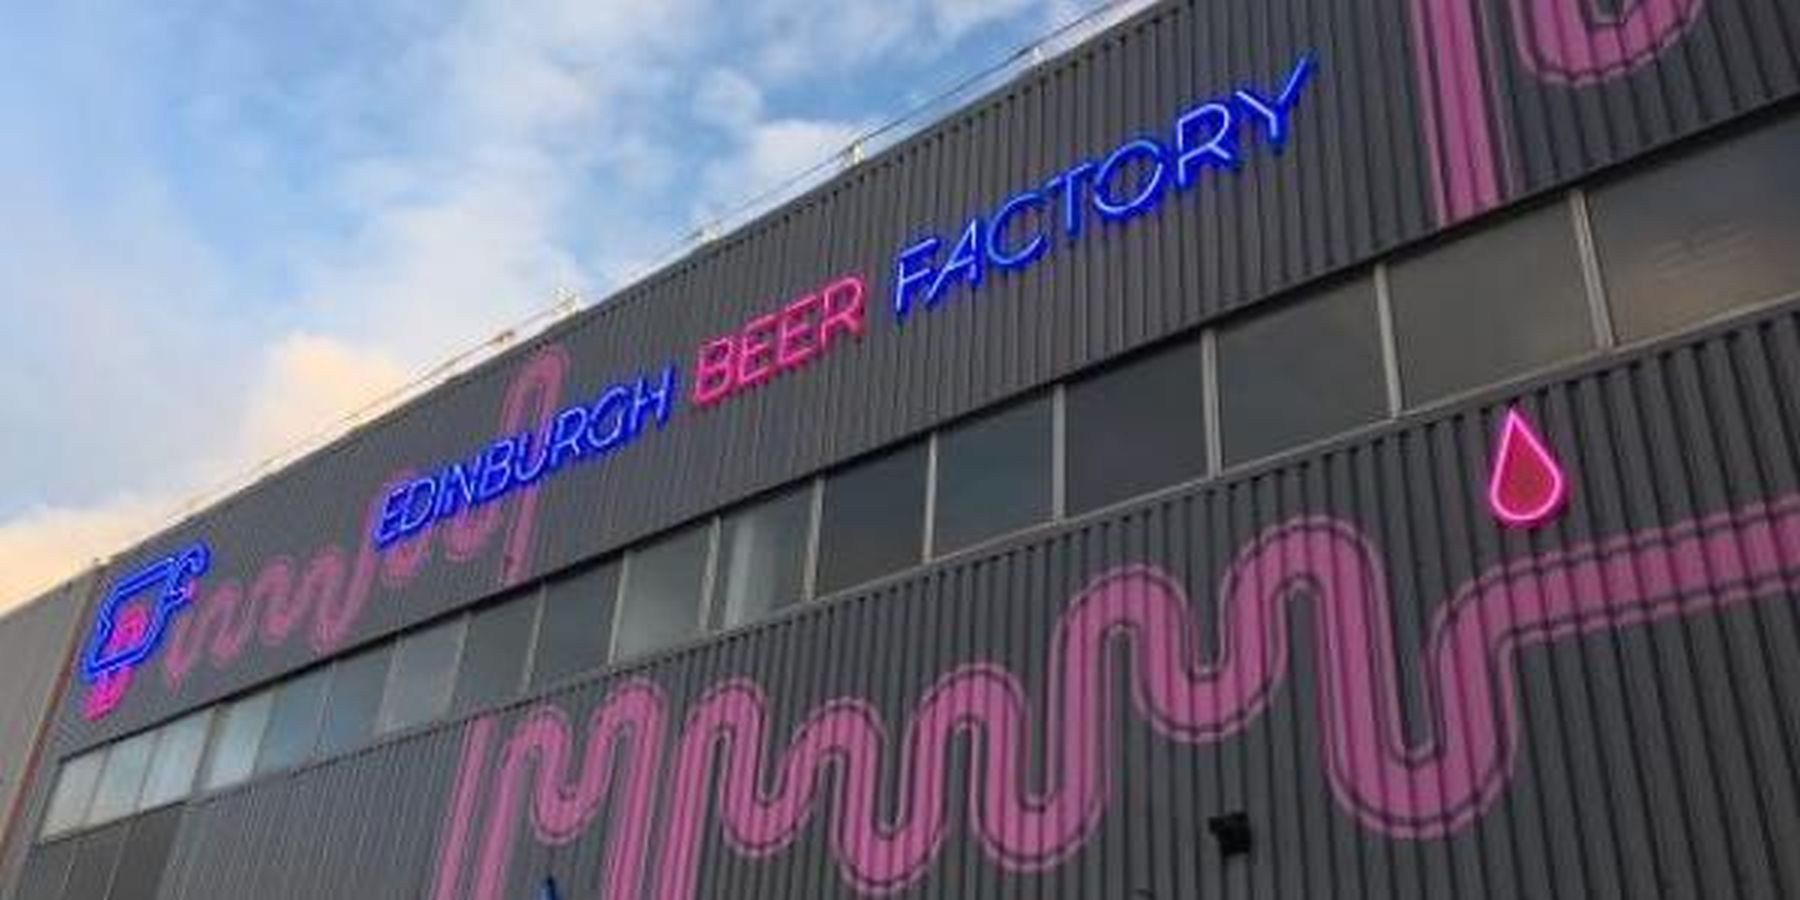 The Edinburgh Beer Factory expands at Bankhead Industrial Estate, Edinburgh Image